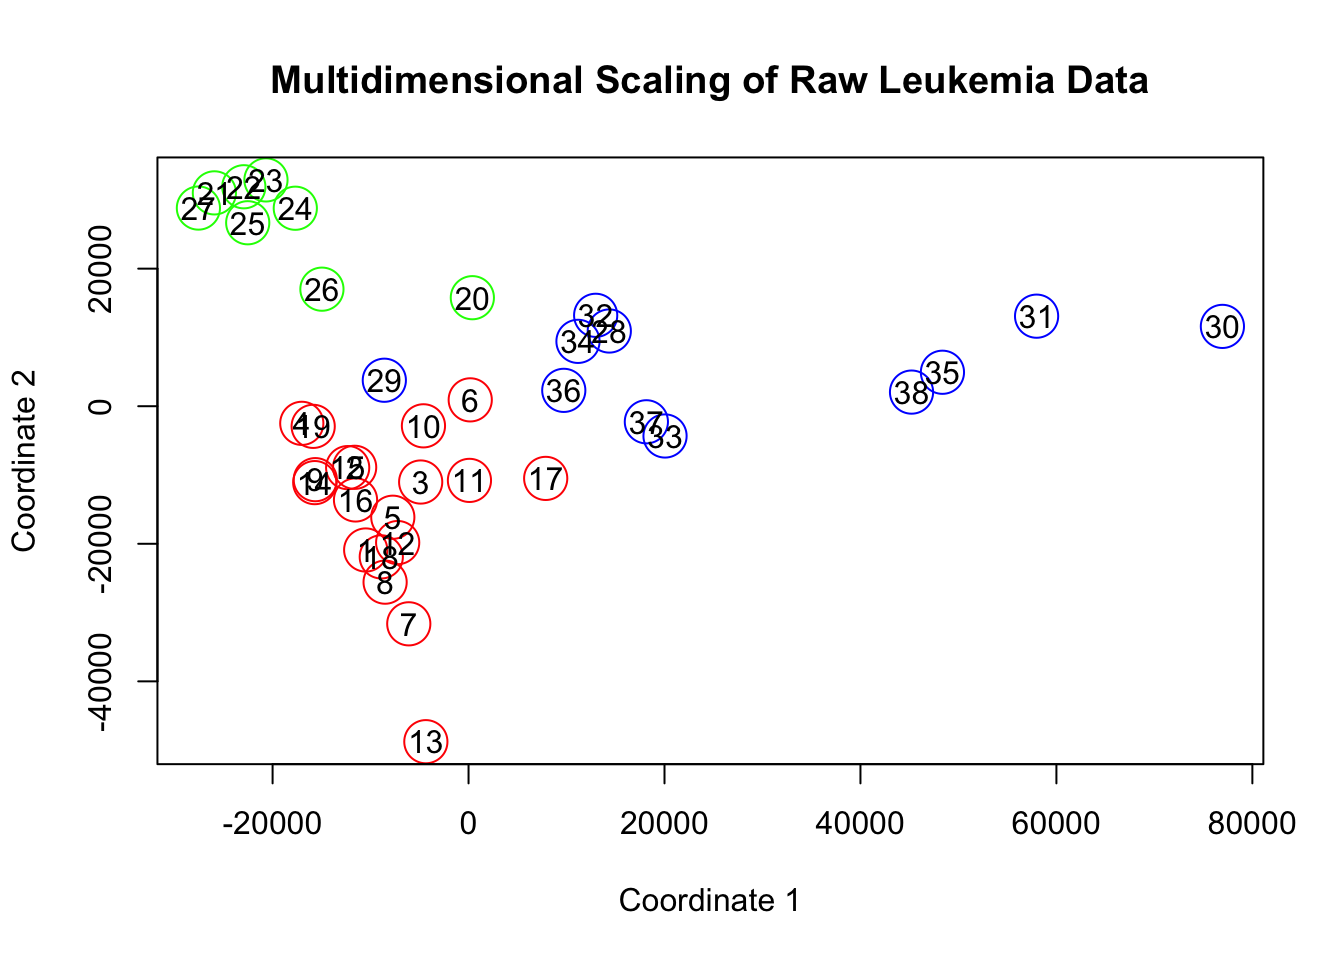 Multidimensional Scaling of the Leukemia Data